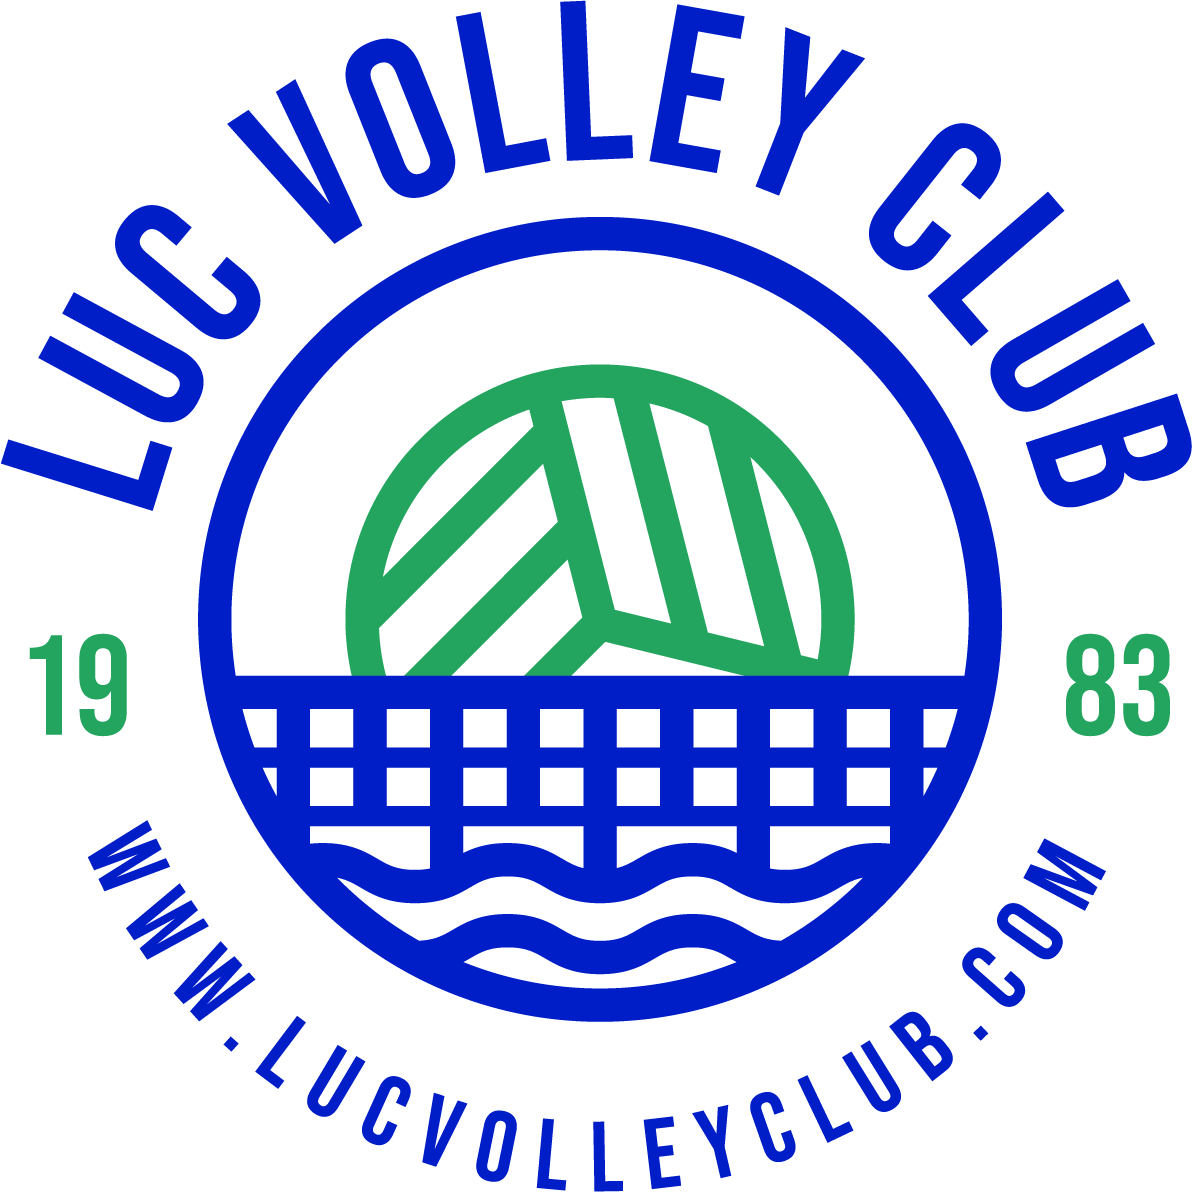 Luc volley club - Luc sur Mer - Club de volley ball de luc sur mer à 15min de Caen